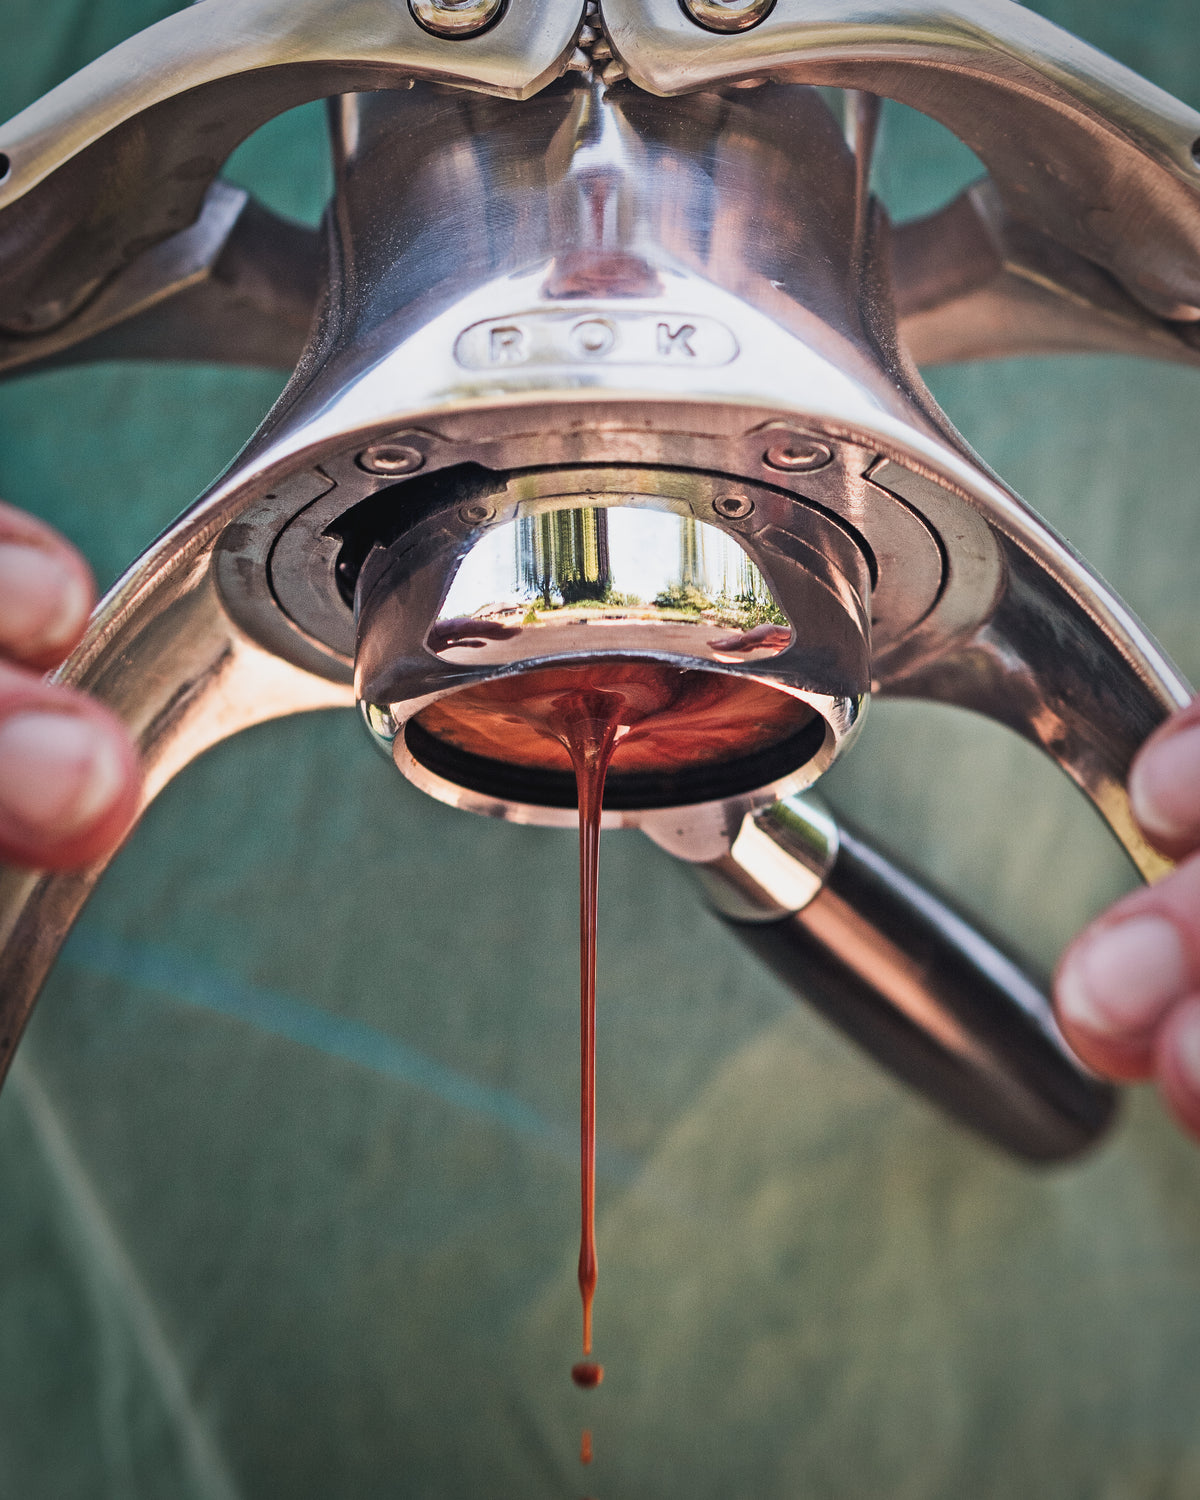 ROK Coffee 便携式浓缩咖啡机 - 耐用的玻璃复合结构